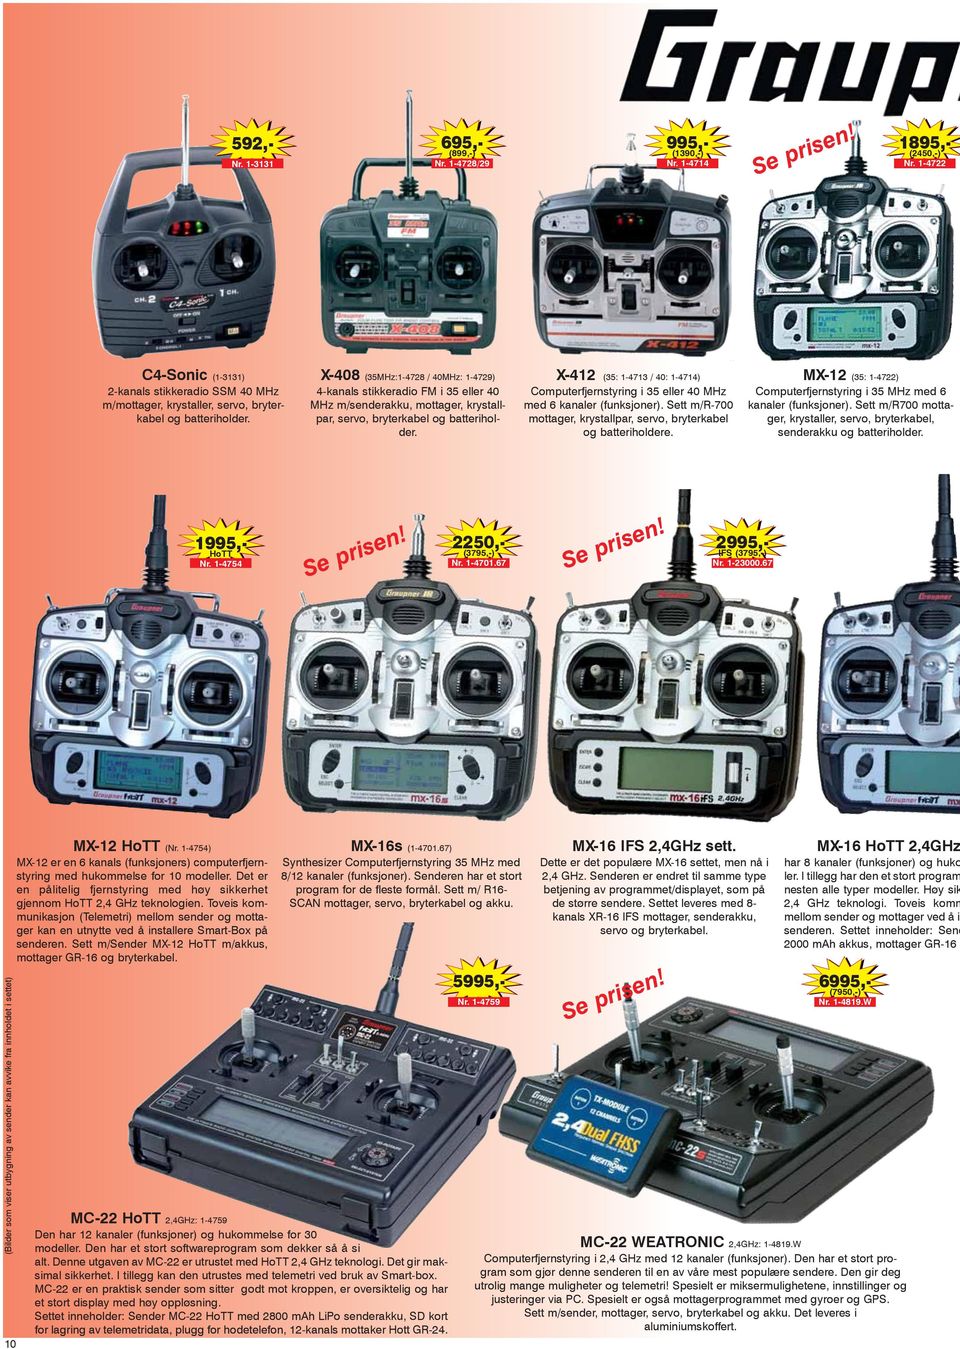 X-408 (35MHz:1-4728 / 40MHz: 1-4729) 4-kanals stikkeradio FM i 35 eller 40 MHz m/senderakku, mottager, krystallpar, servo, bryterkabel og batteriholder.